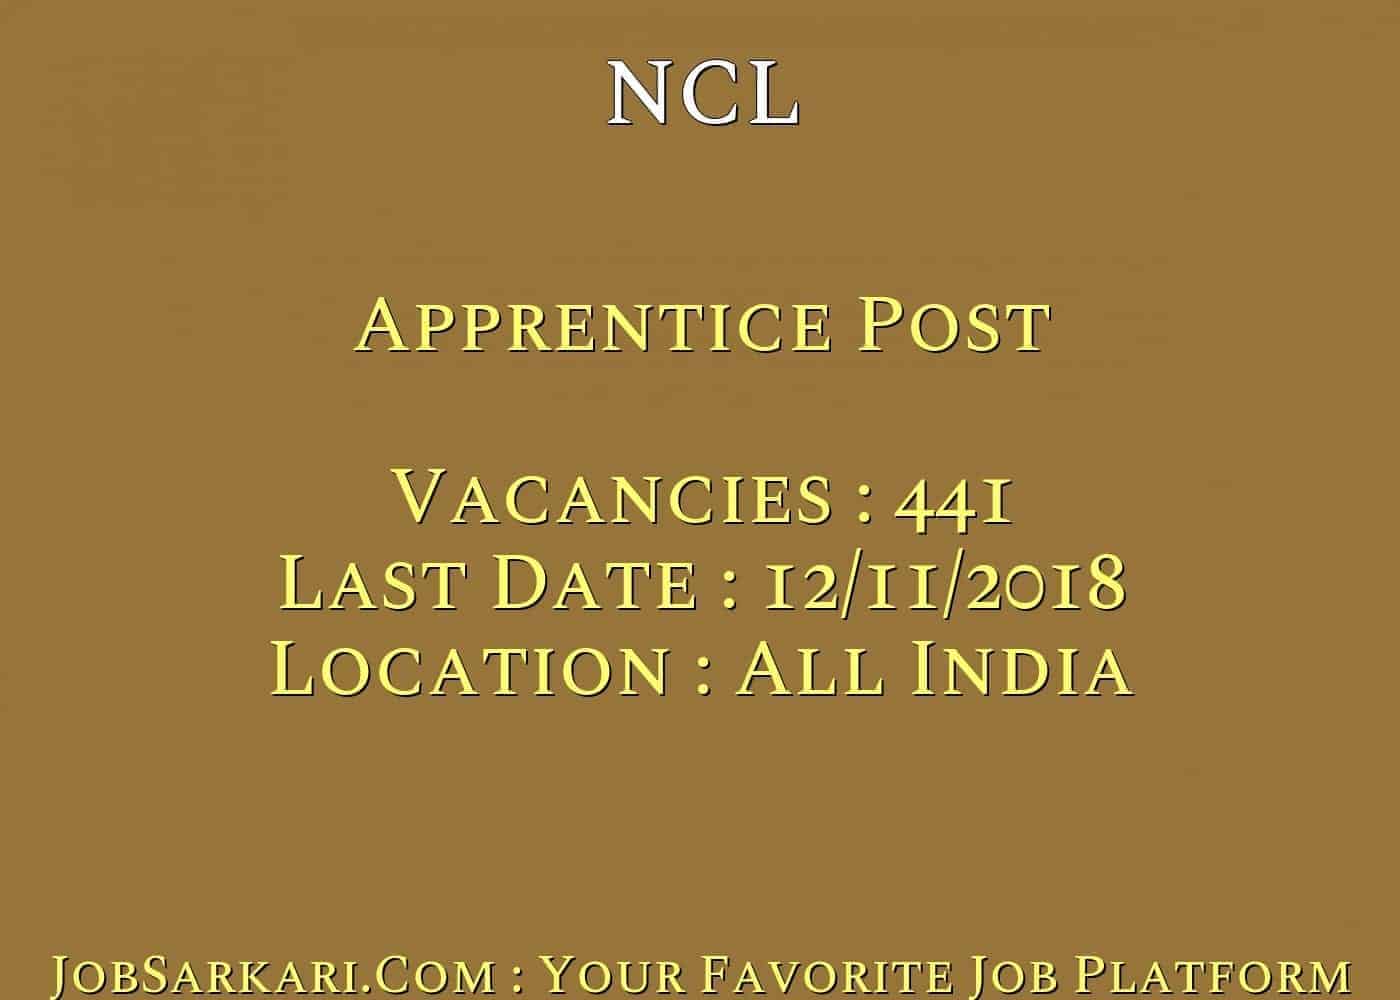 NCL Recruitment 2018 for Apprentice Post